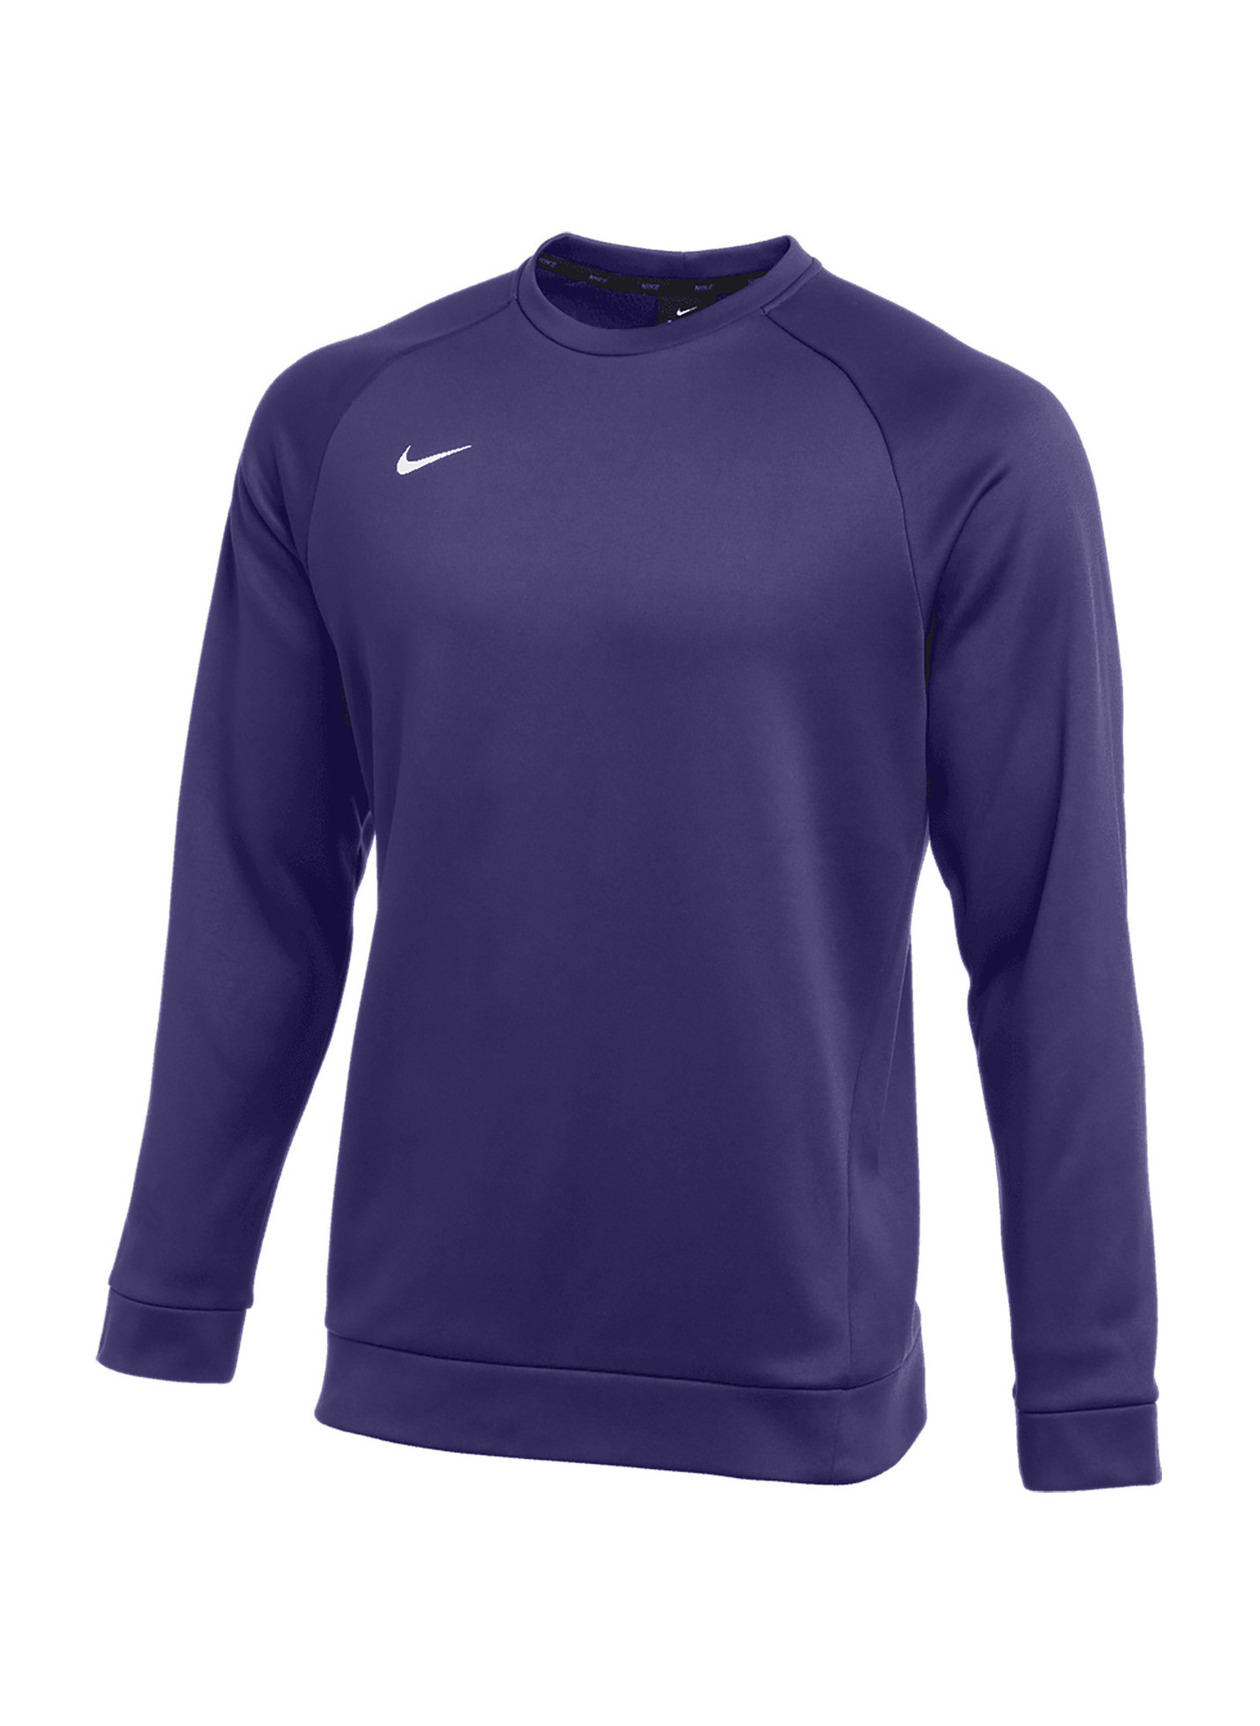 Nike Men's Team Purple / White Therma Crew